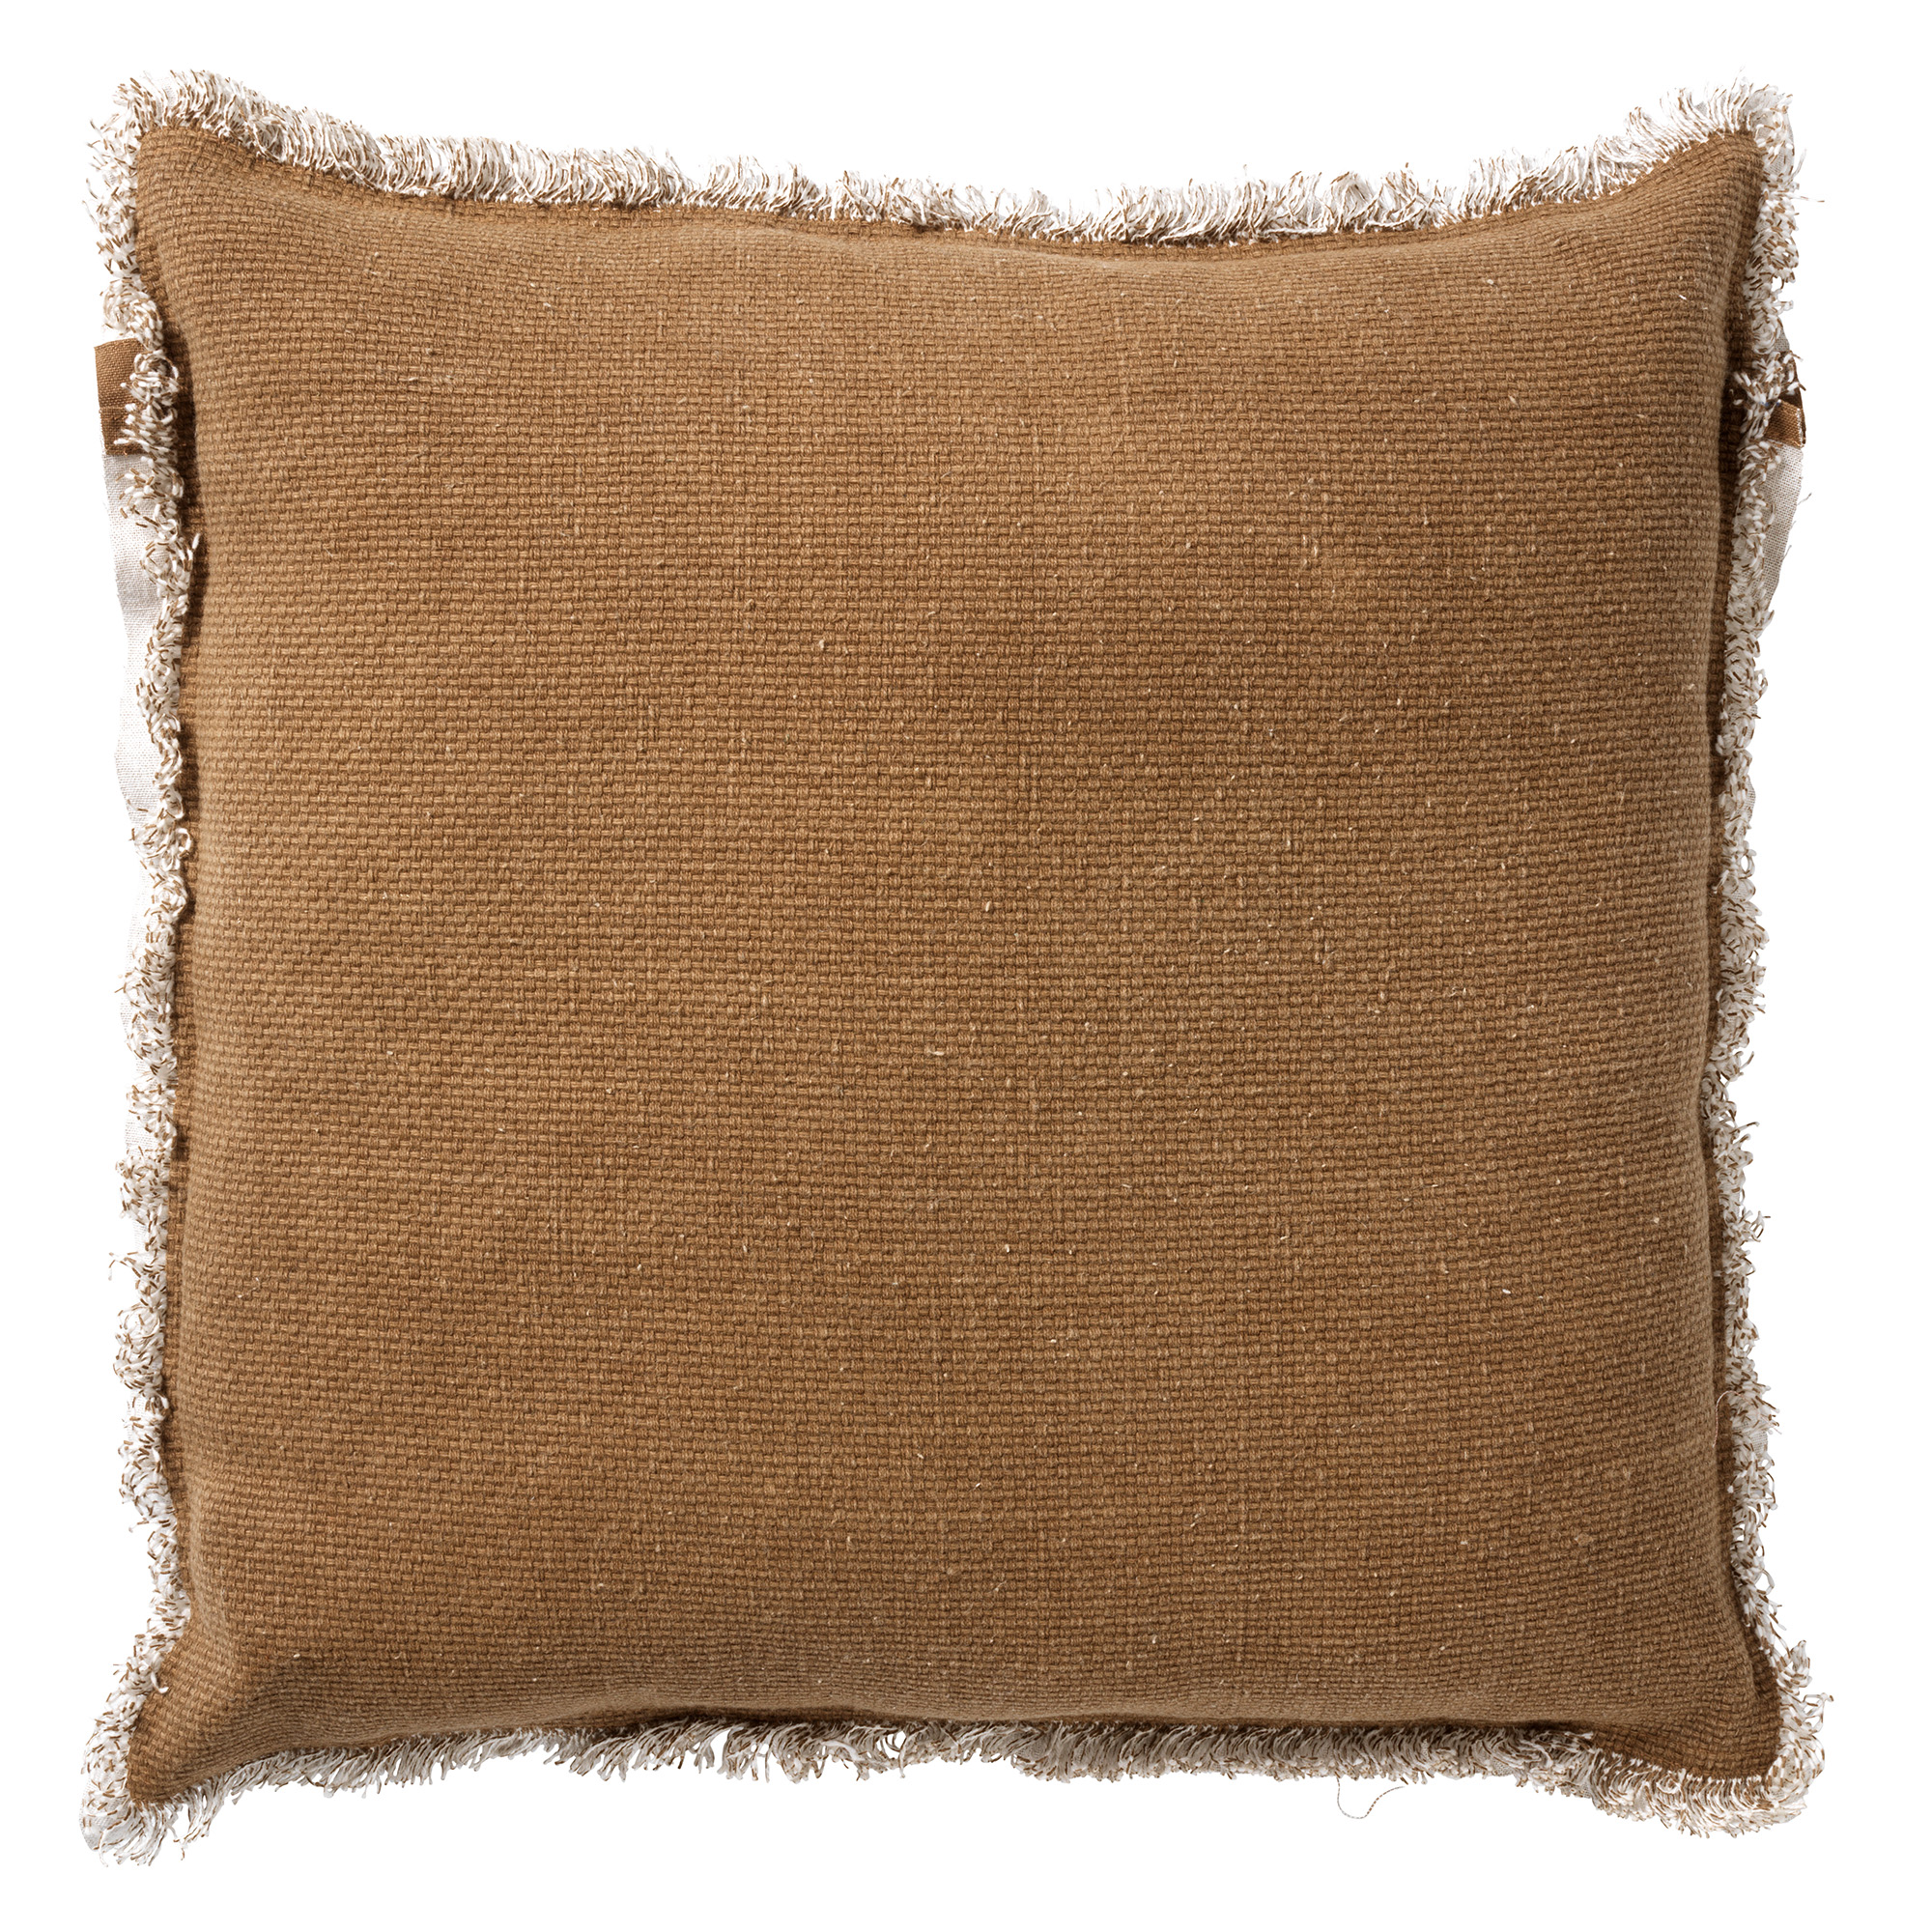 BURTO - Cushion 45x45 cm Tobacco brown - brown